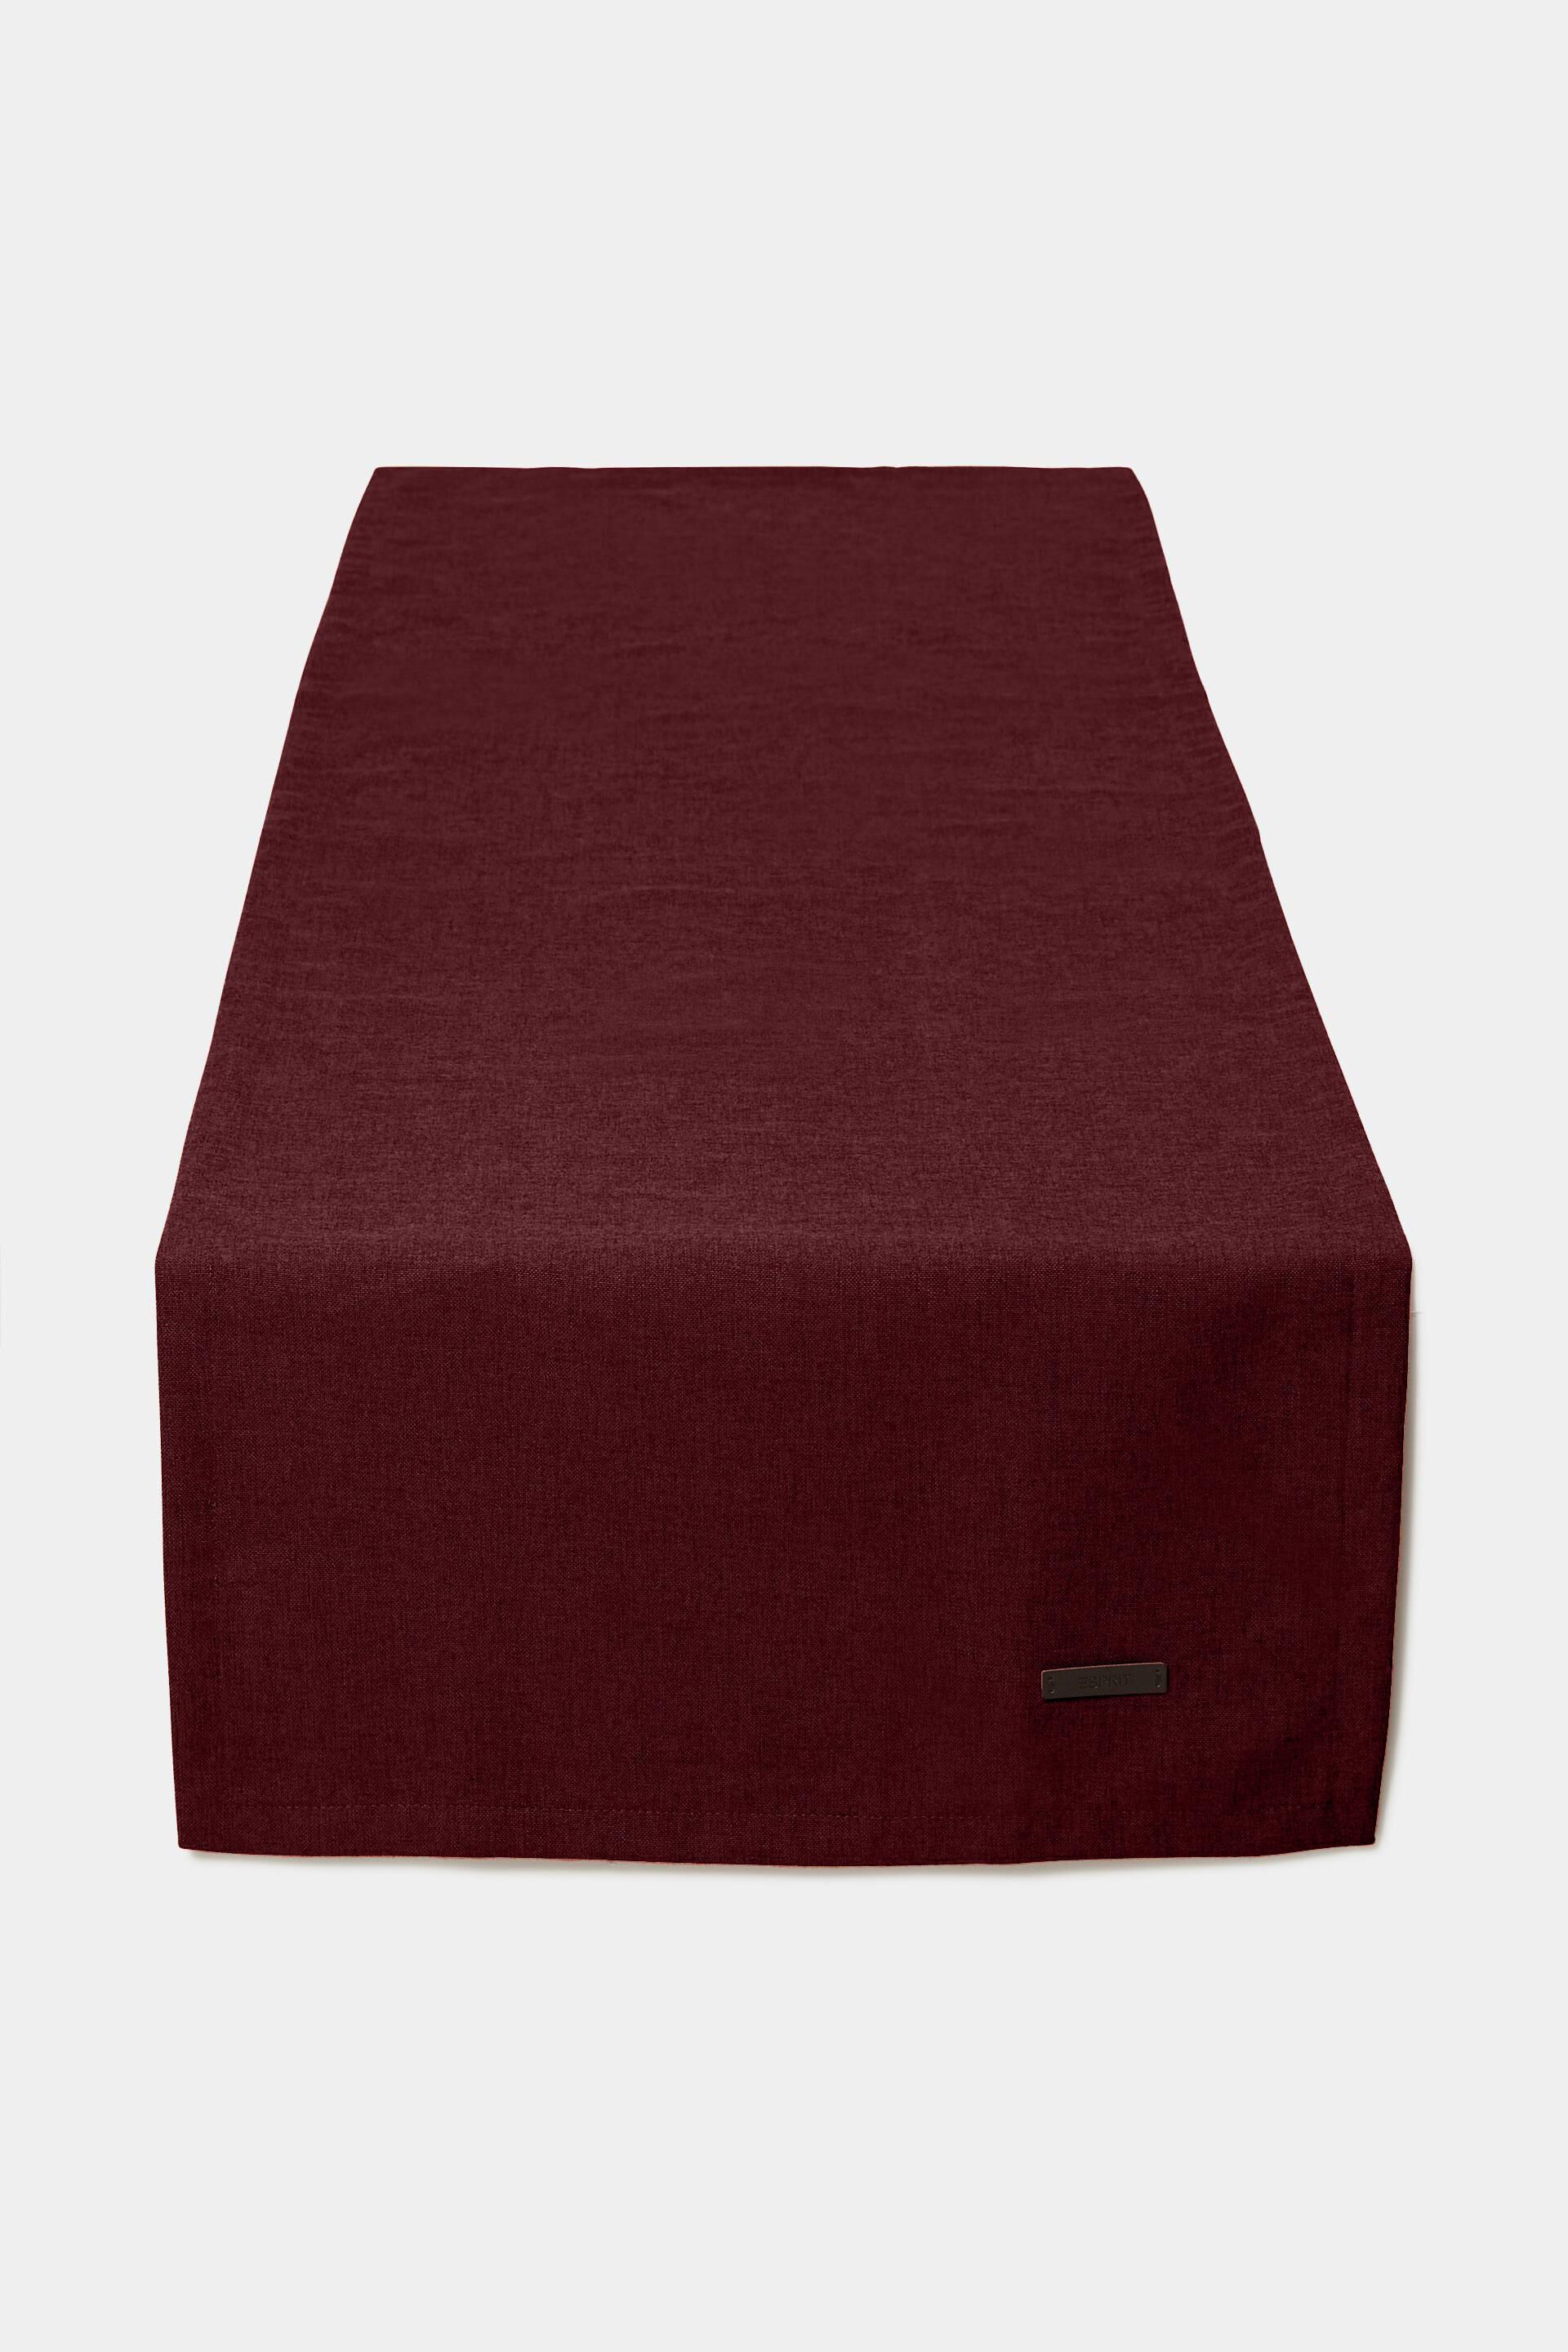 Esprit woven runner in melange Table fabric